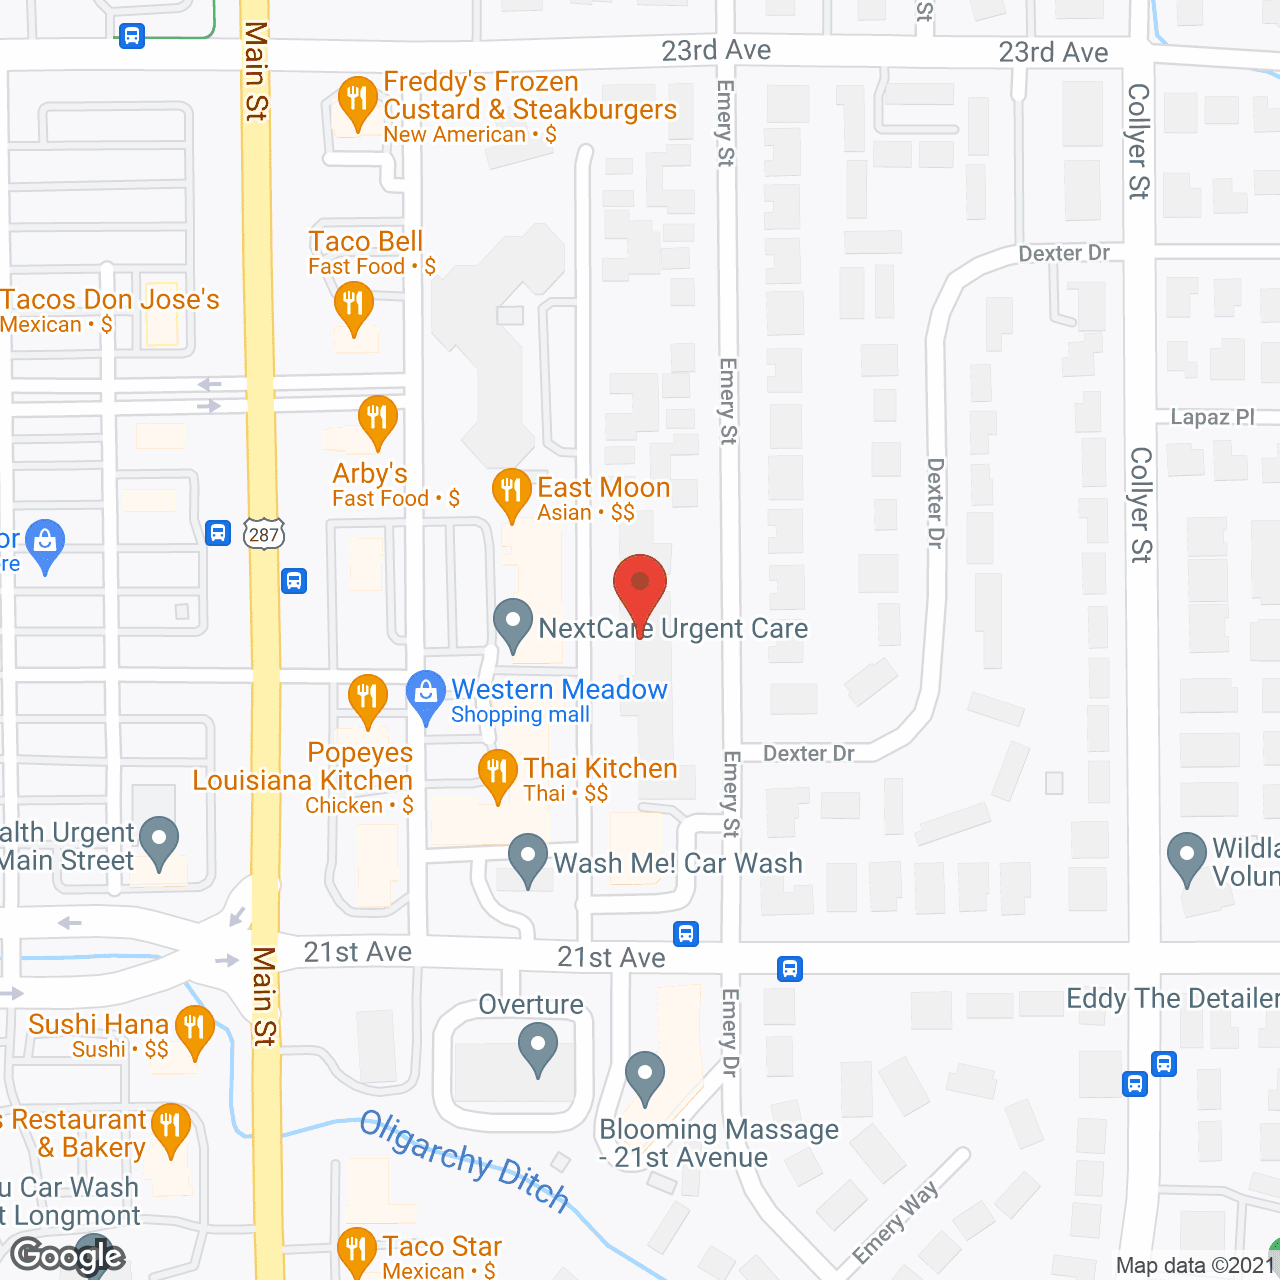 Longs Peak Residence Ltd in google map